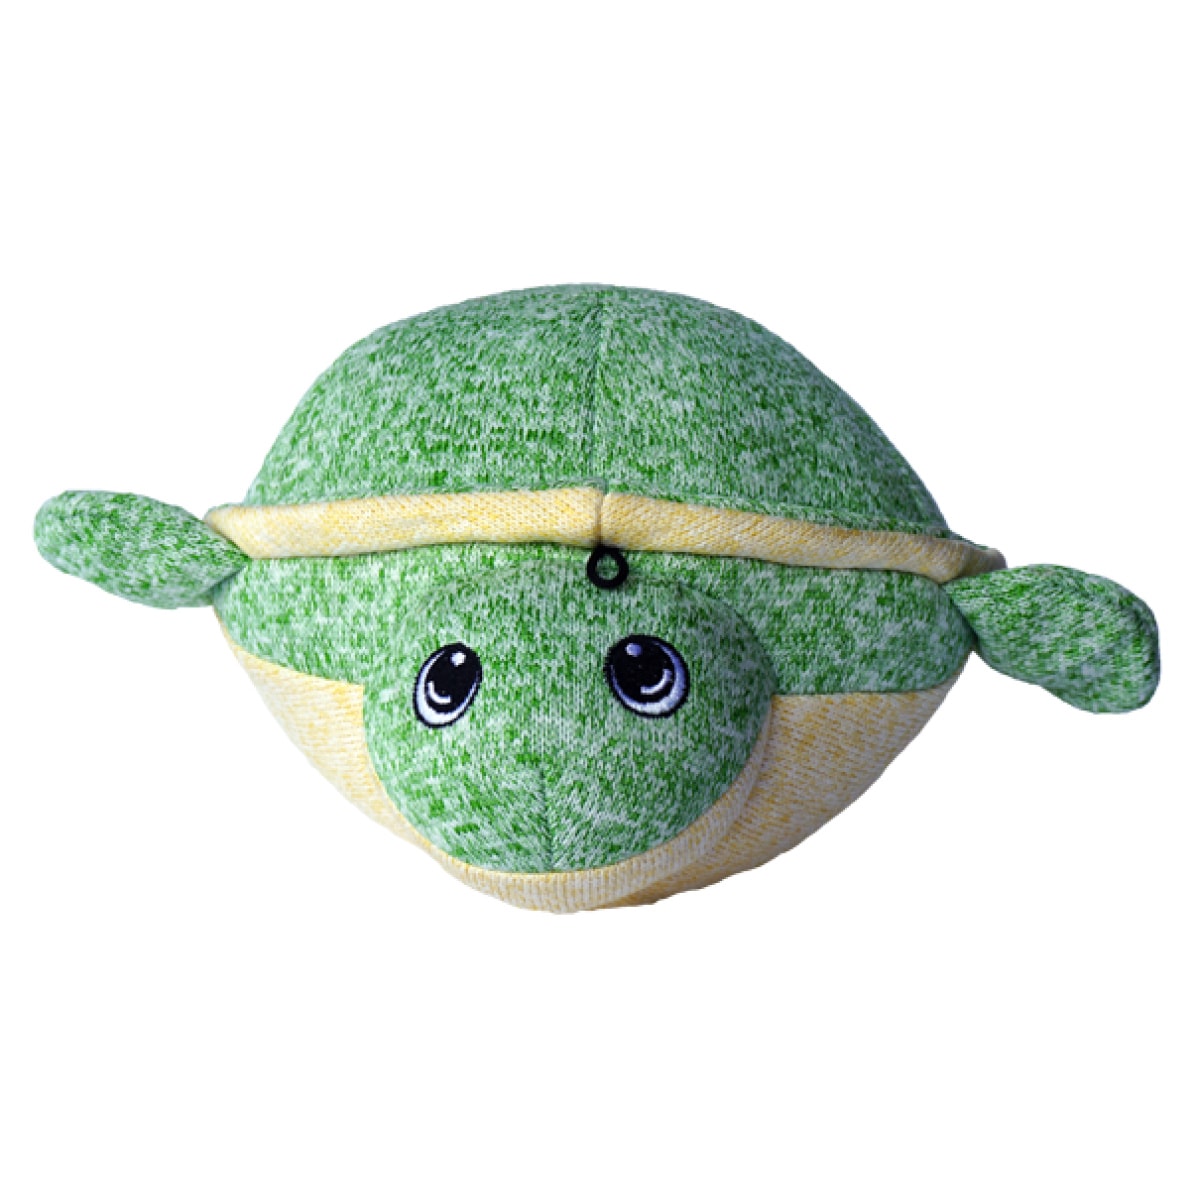 Gor Hugs - Softball Turtle Main Image